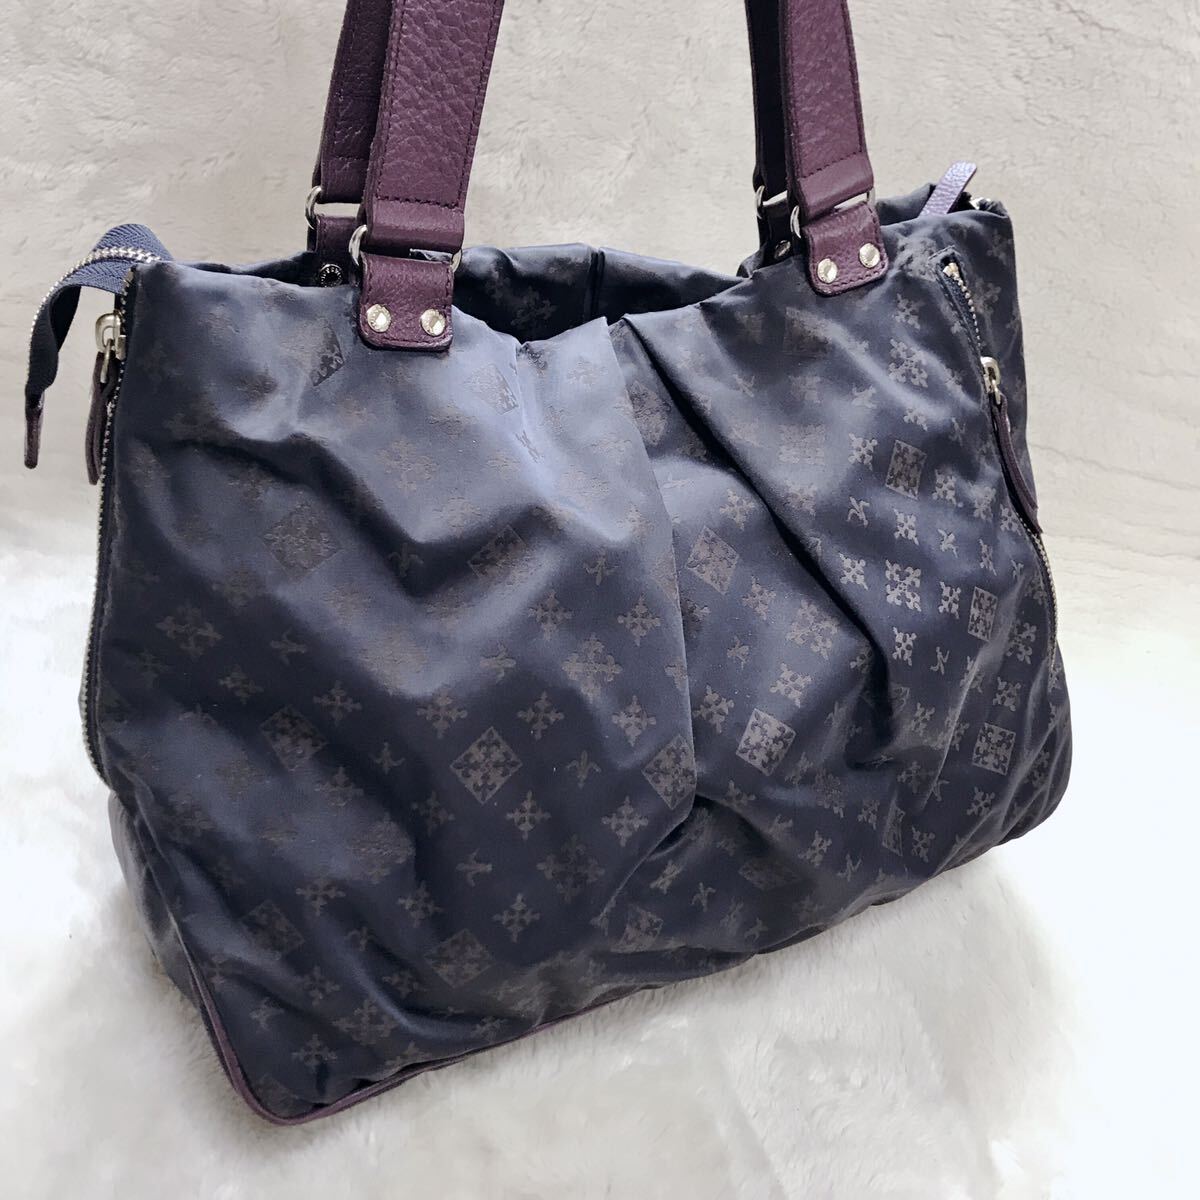  beautiful goods Russet monogram tote bag handbag leather nylon purple russet